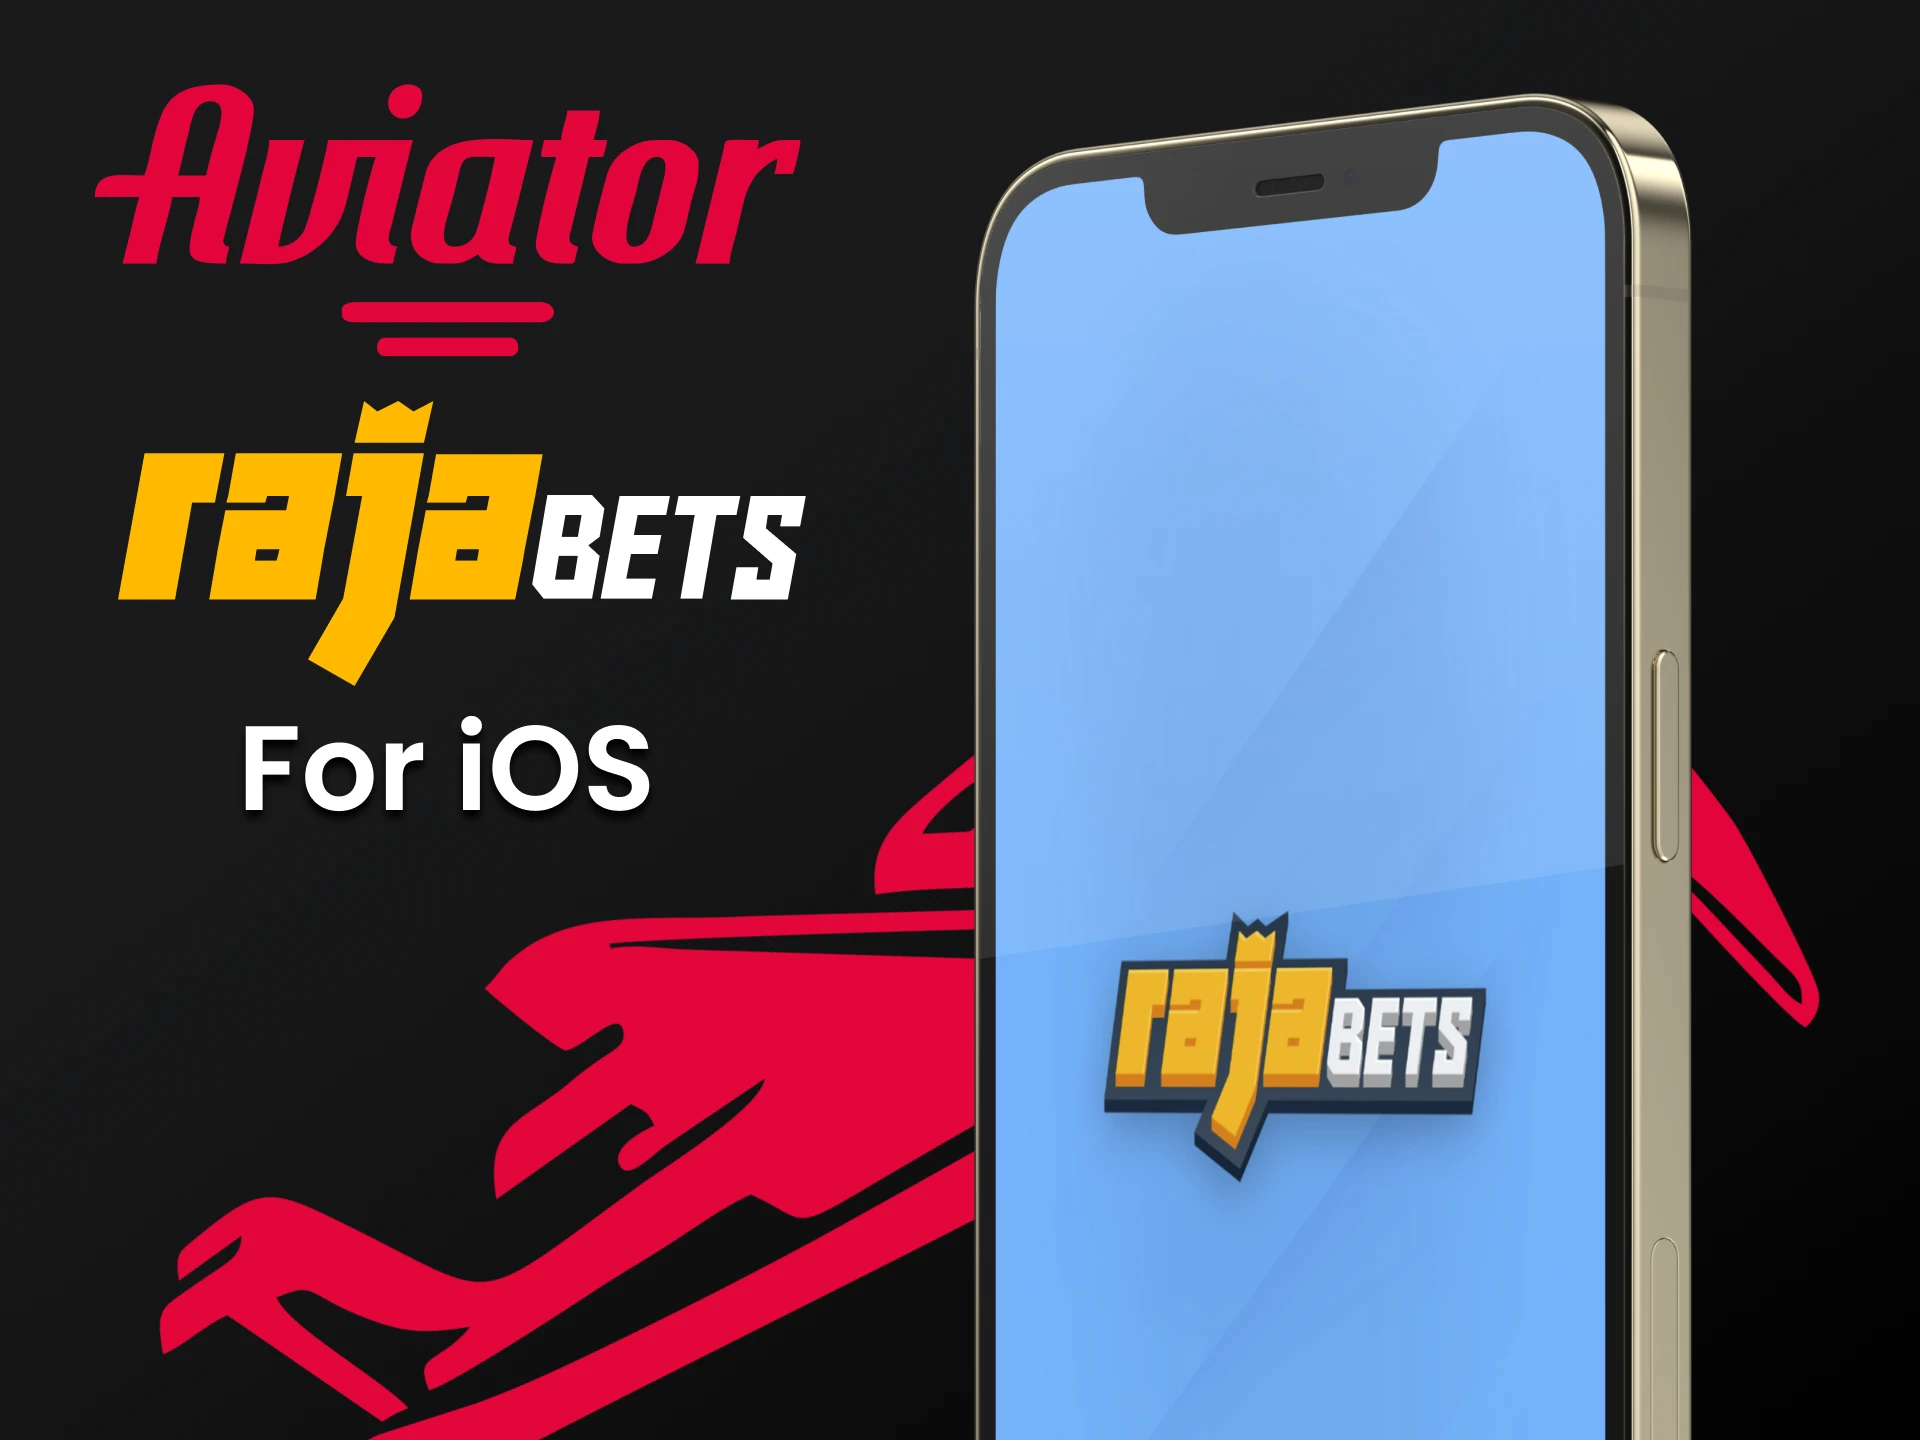 Install the Rajabets iOS app to play Aviator.